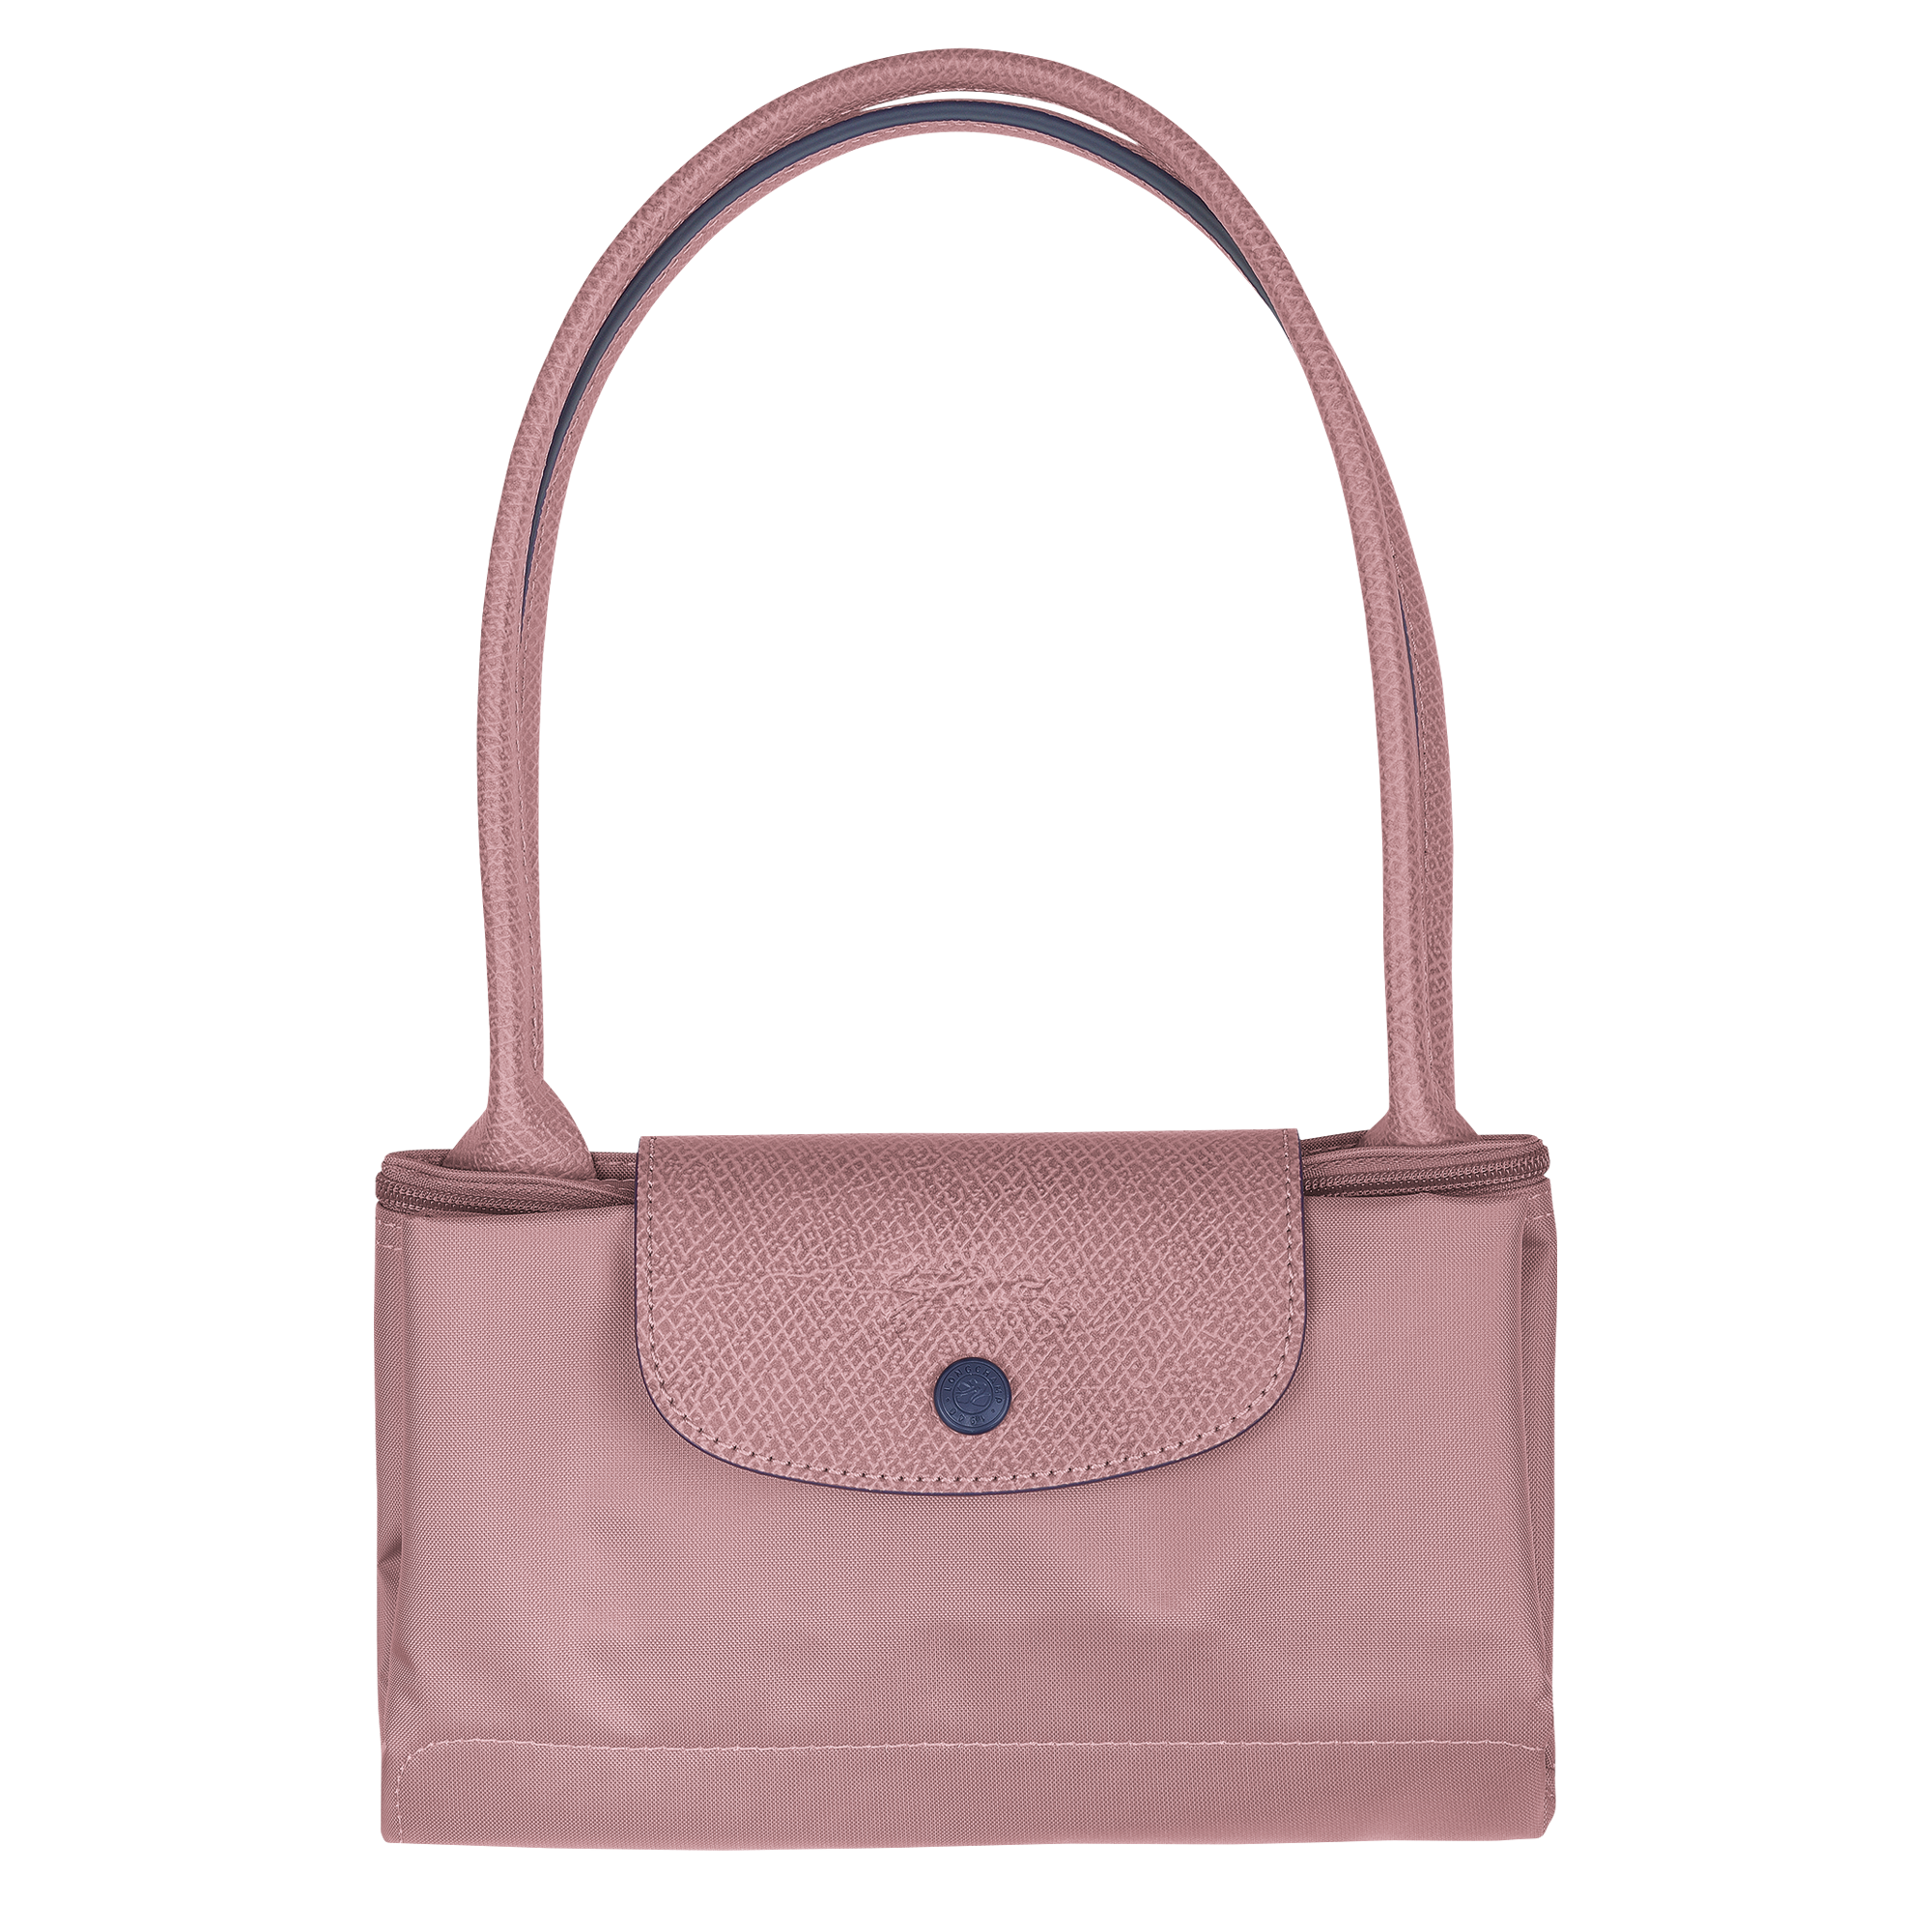 longchamp pink tote bag